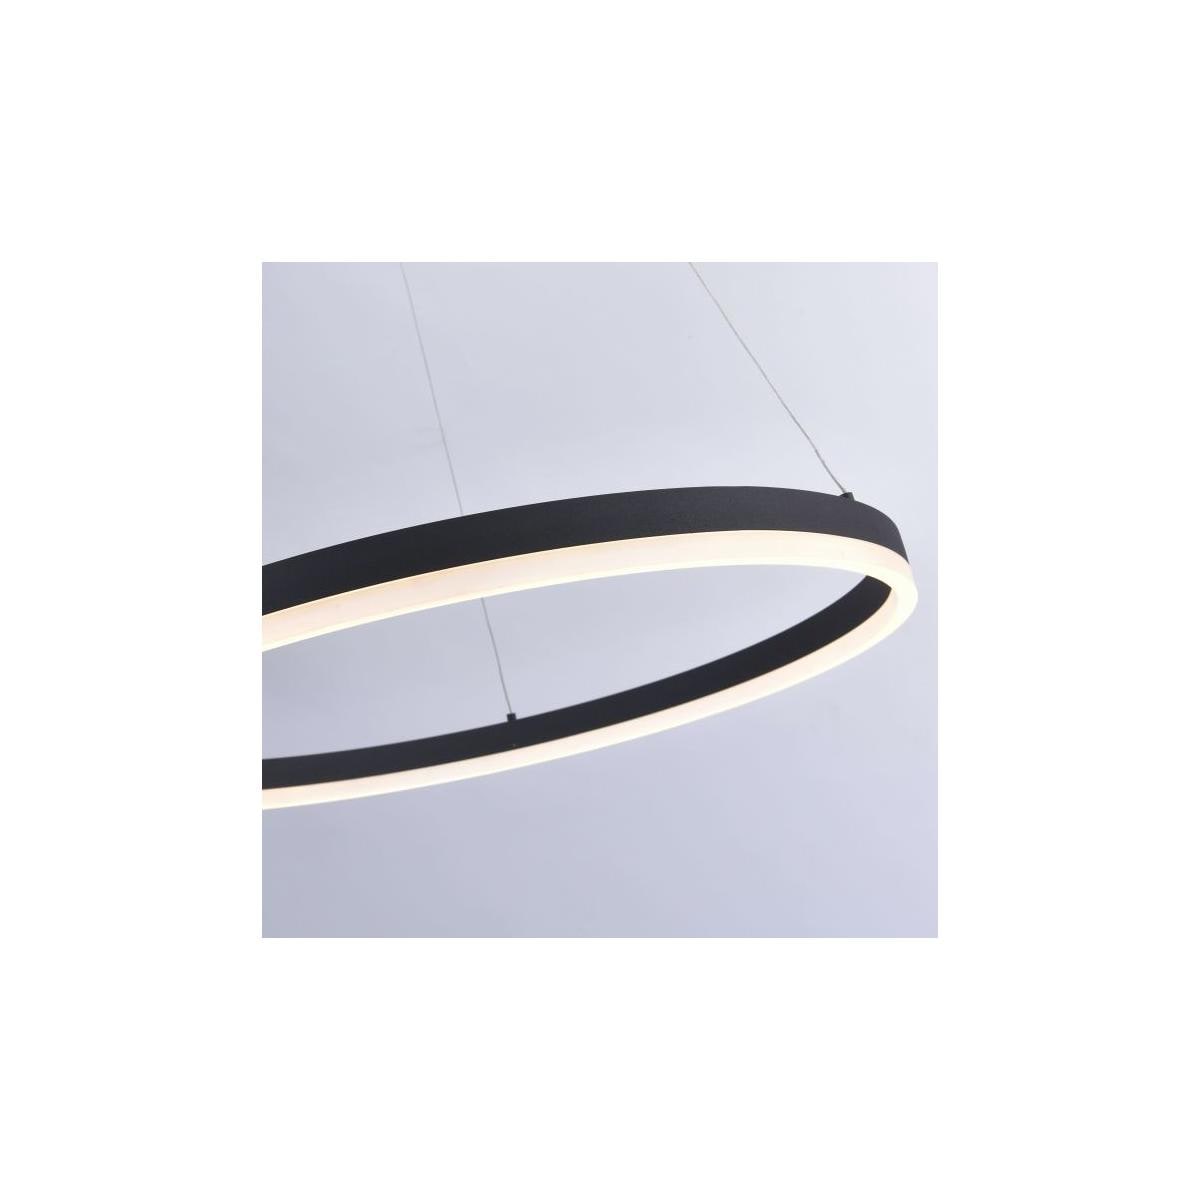 Paul Neuhaus LED Pendelleuchte, anthrazit, runde Form, dimmbar, Memory  Funktion, modern, 38W, 5250lm (2382-13) Elektroshop Wagner